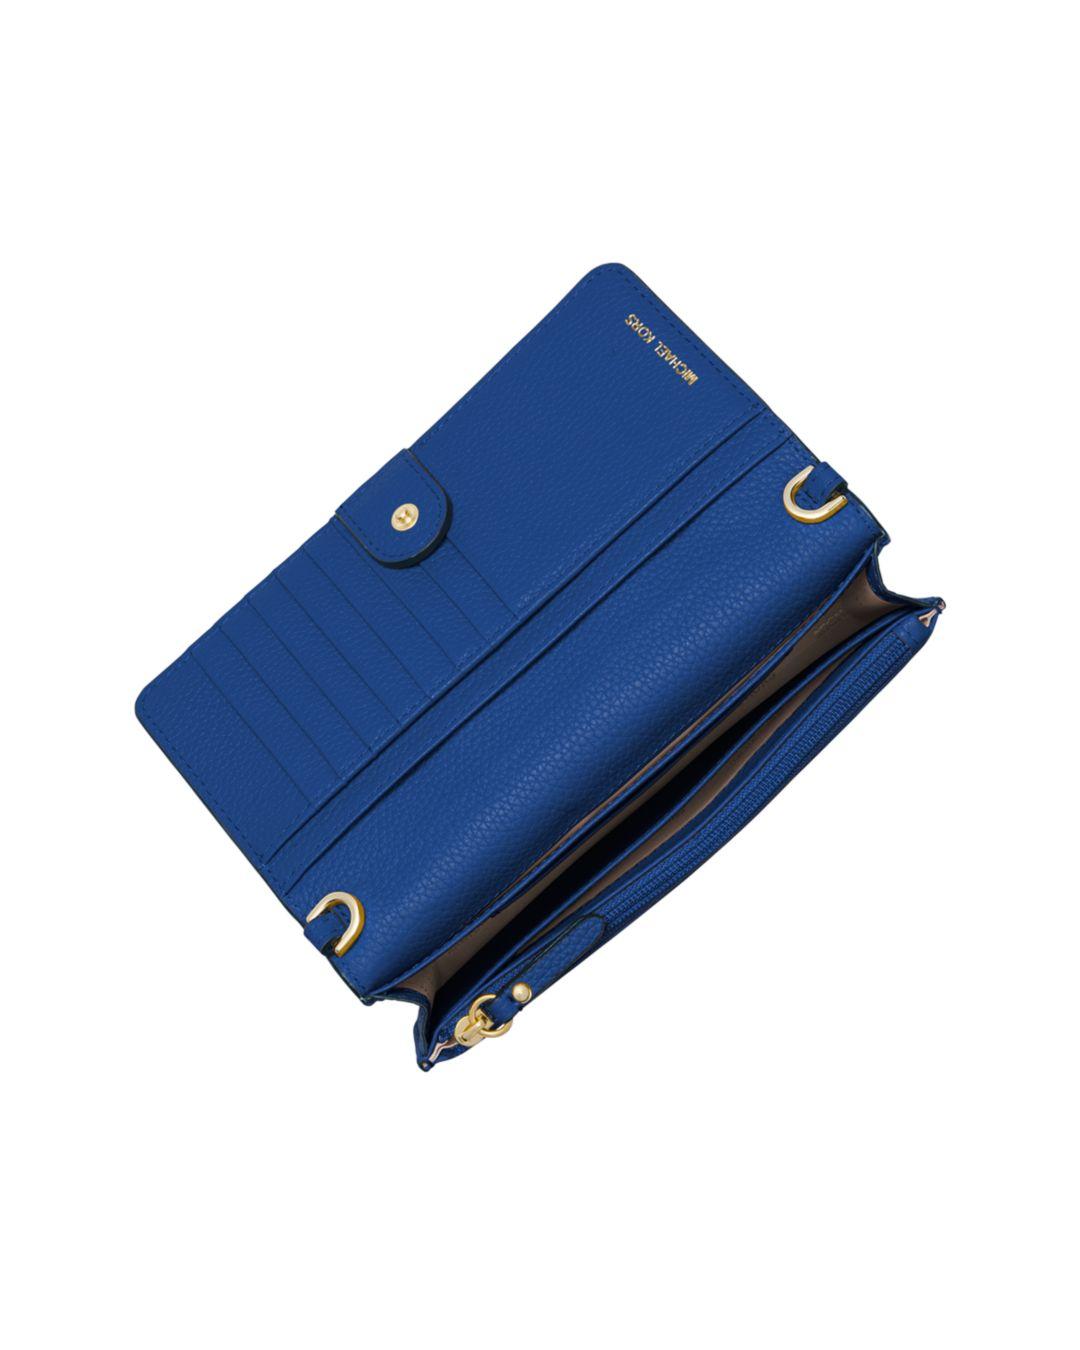 MICHAEL Michael Kors Leather Smartphone Crossbody in Vintage Blue/Gold (Blue) - Lyst